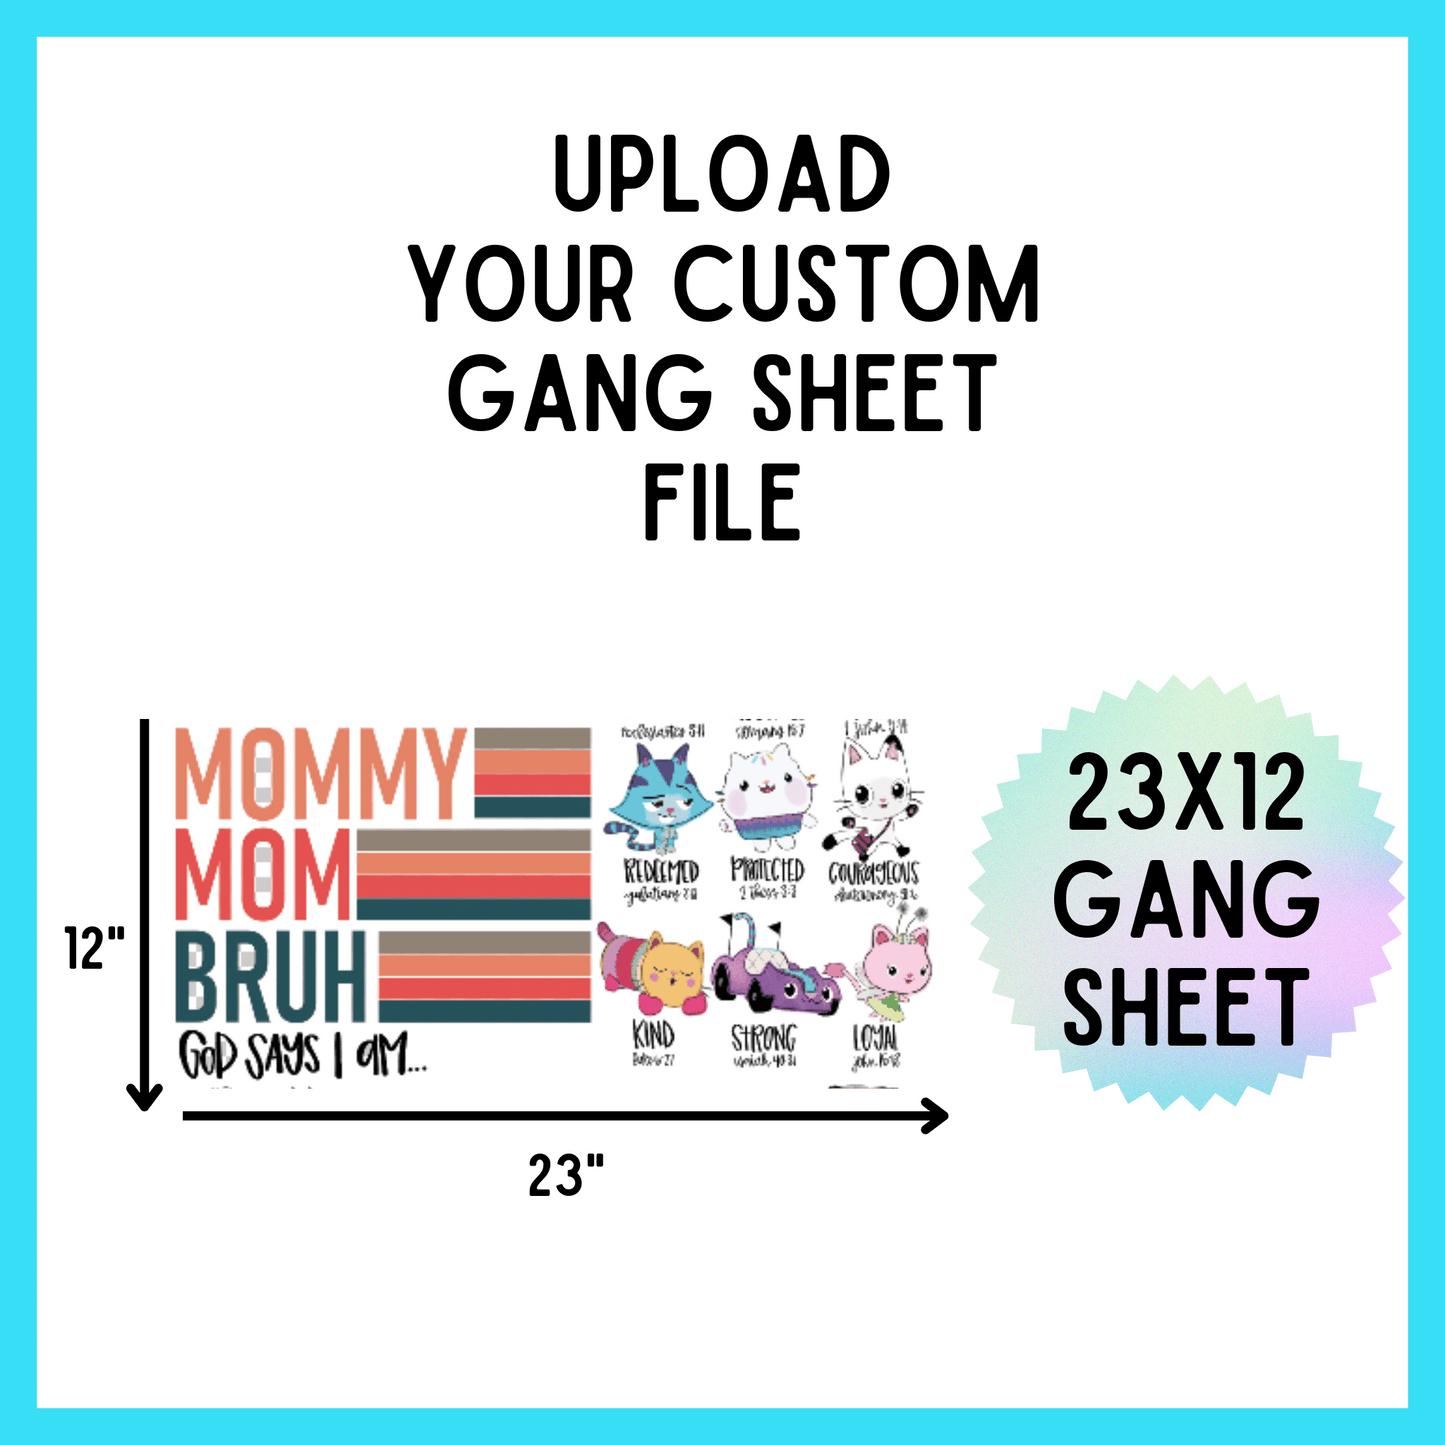 Upload Your Custom Gang Sheet File